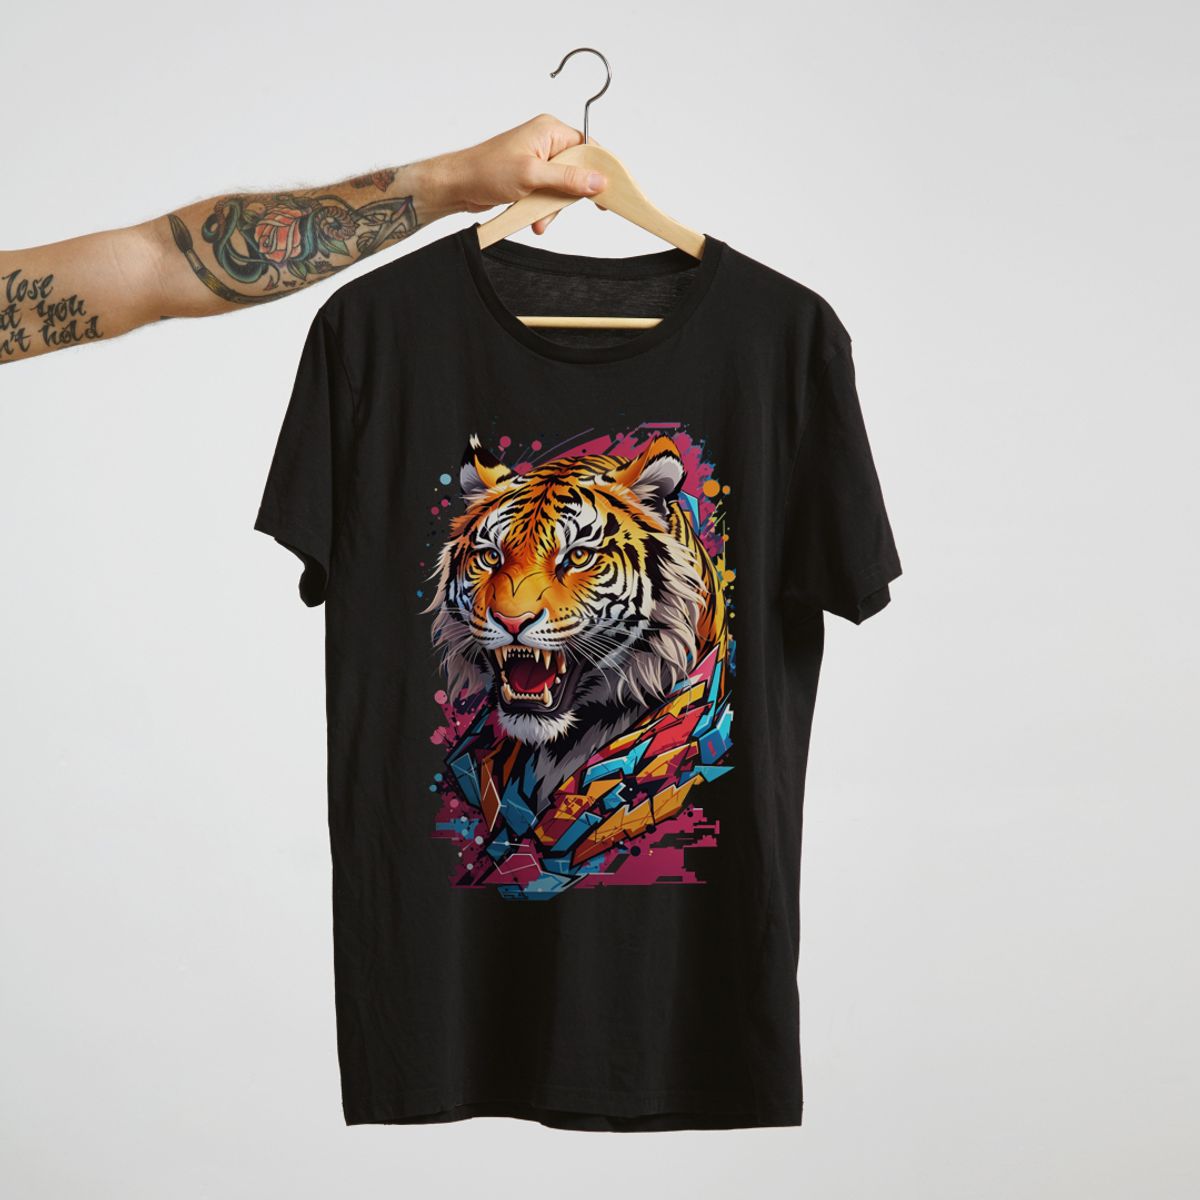 Nome do produto: Camiseta Tigre Graffiti